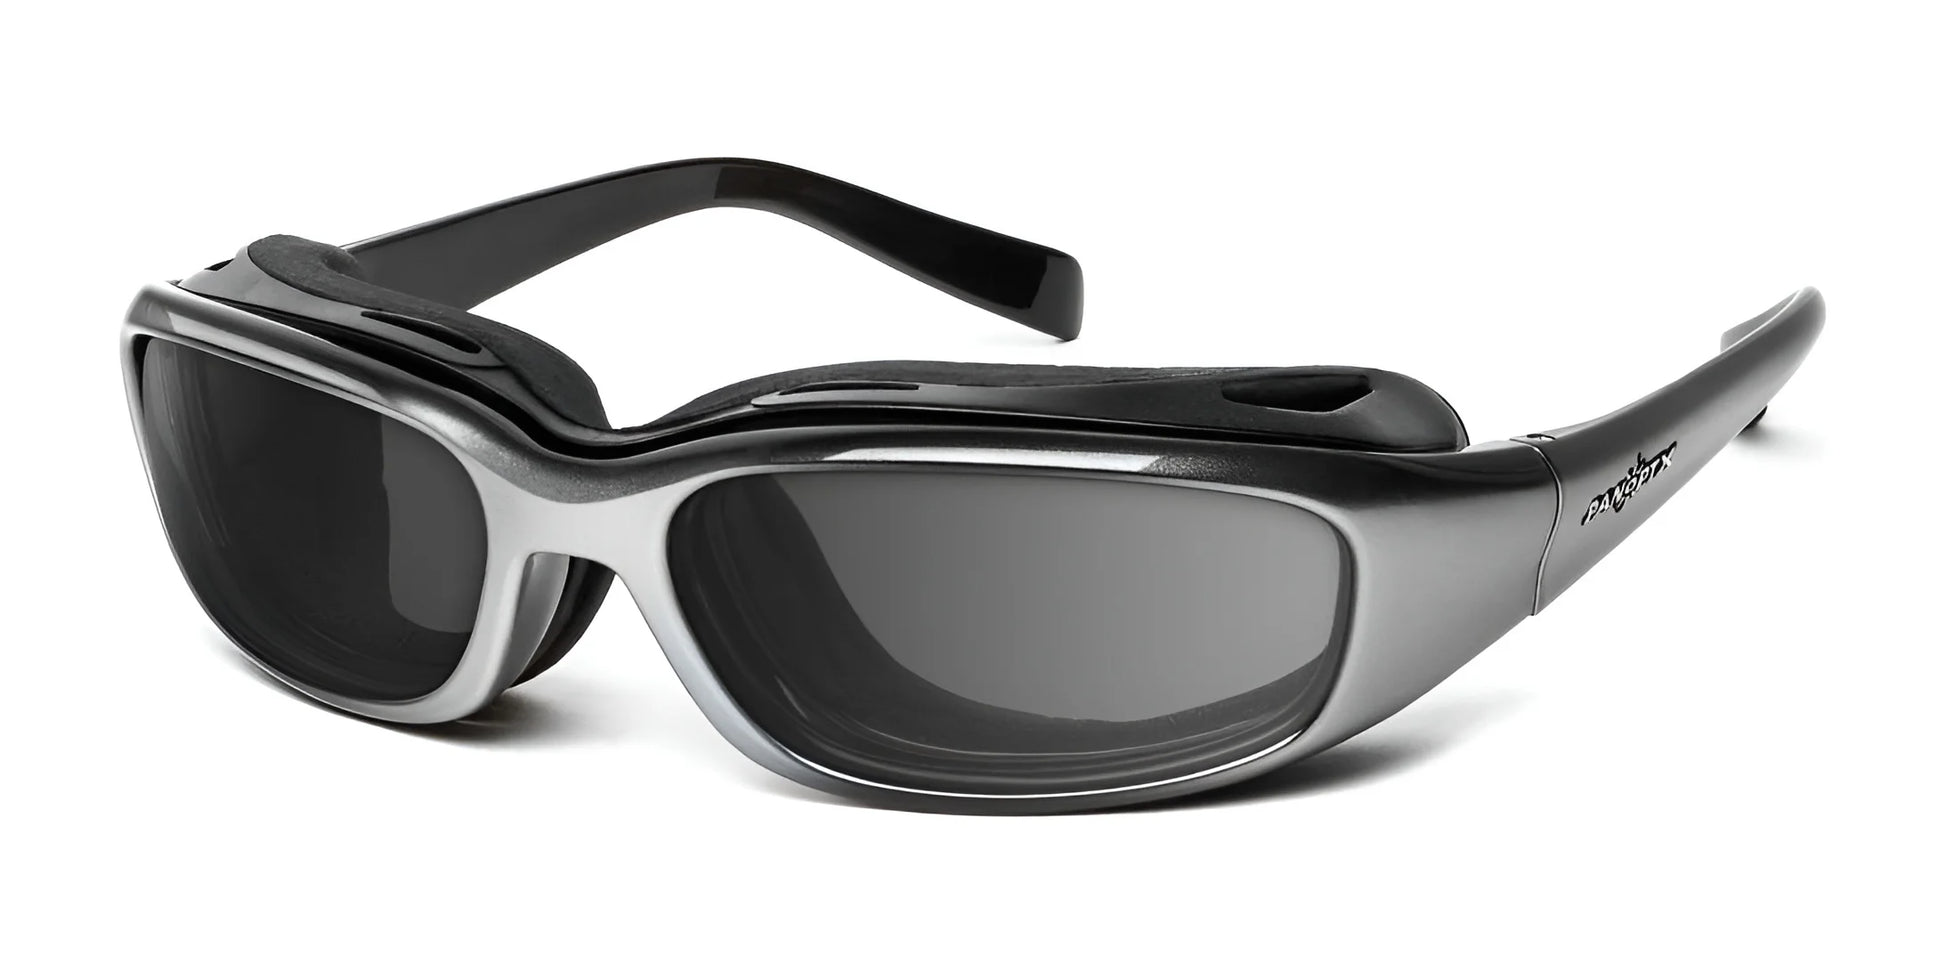 7eye Sirocco Sunglasses Steel Metallic / DARKshift Photochromic - Clr to DARK Gray